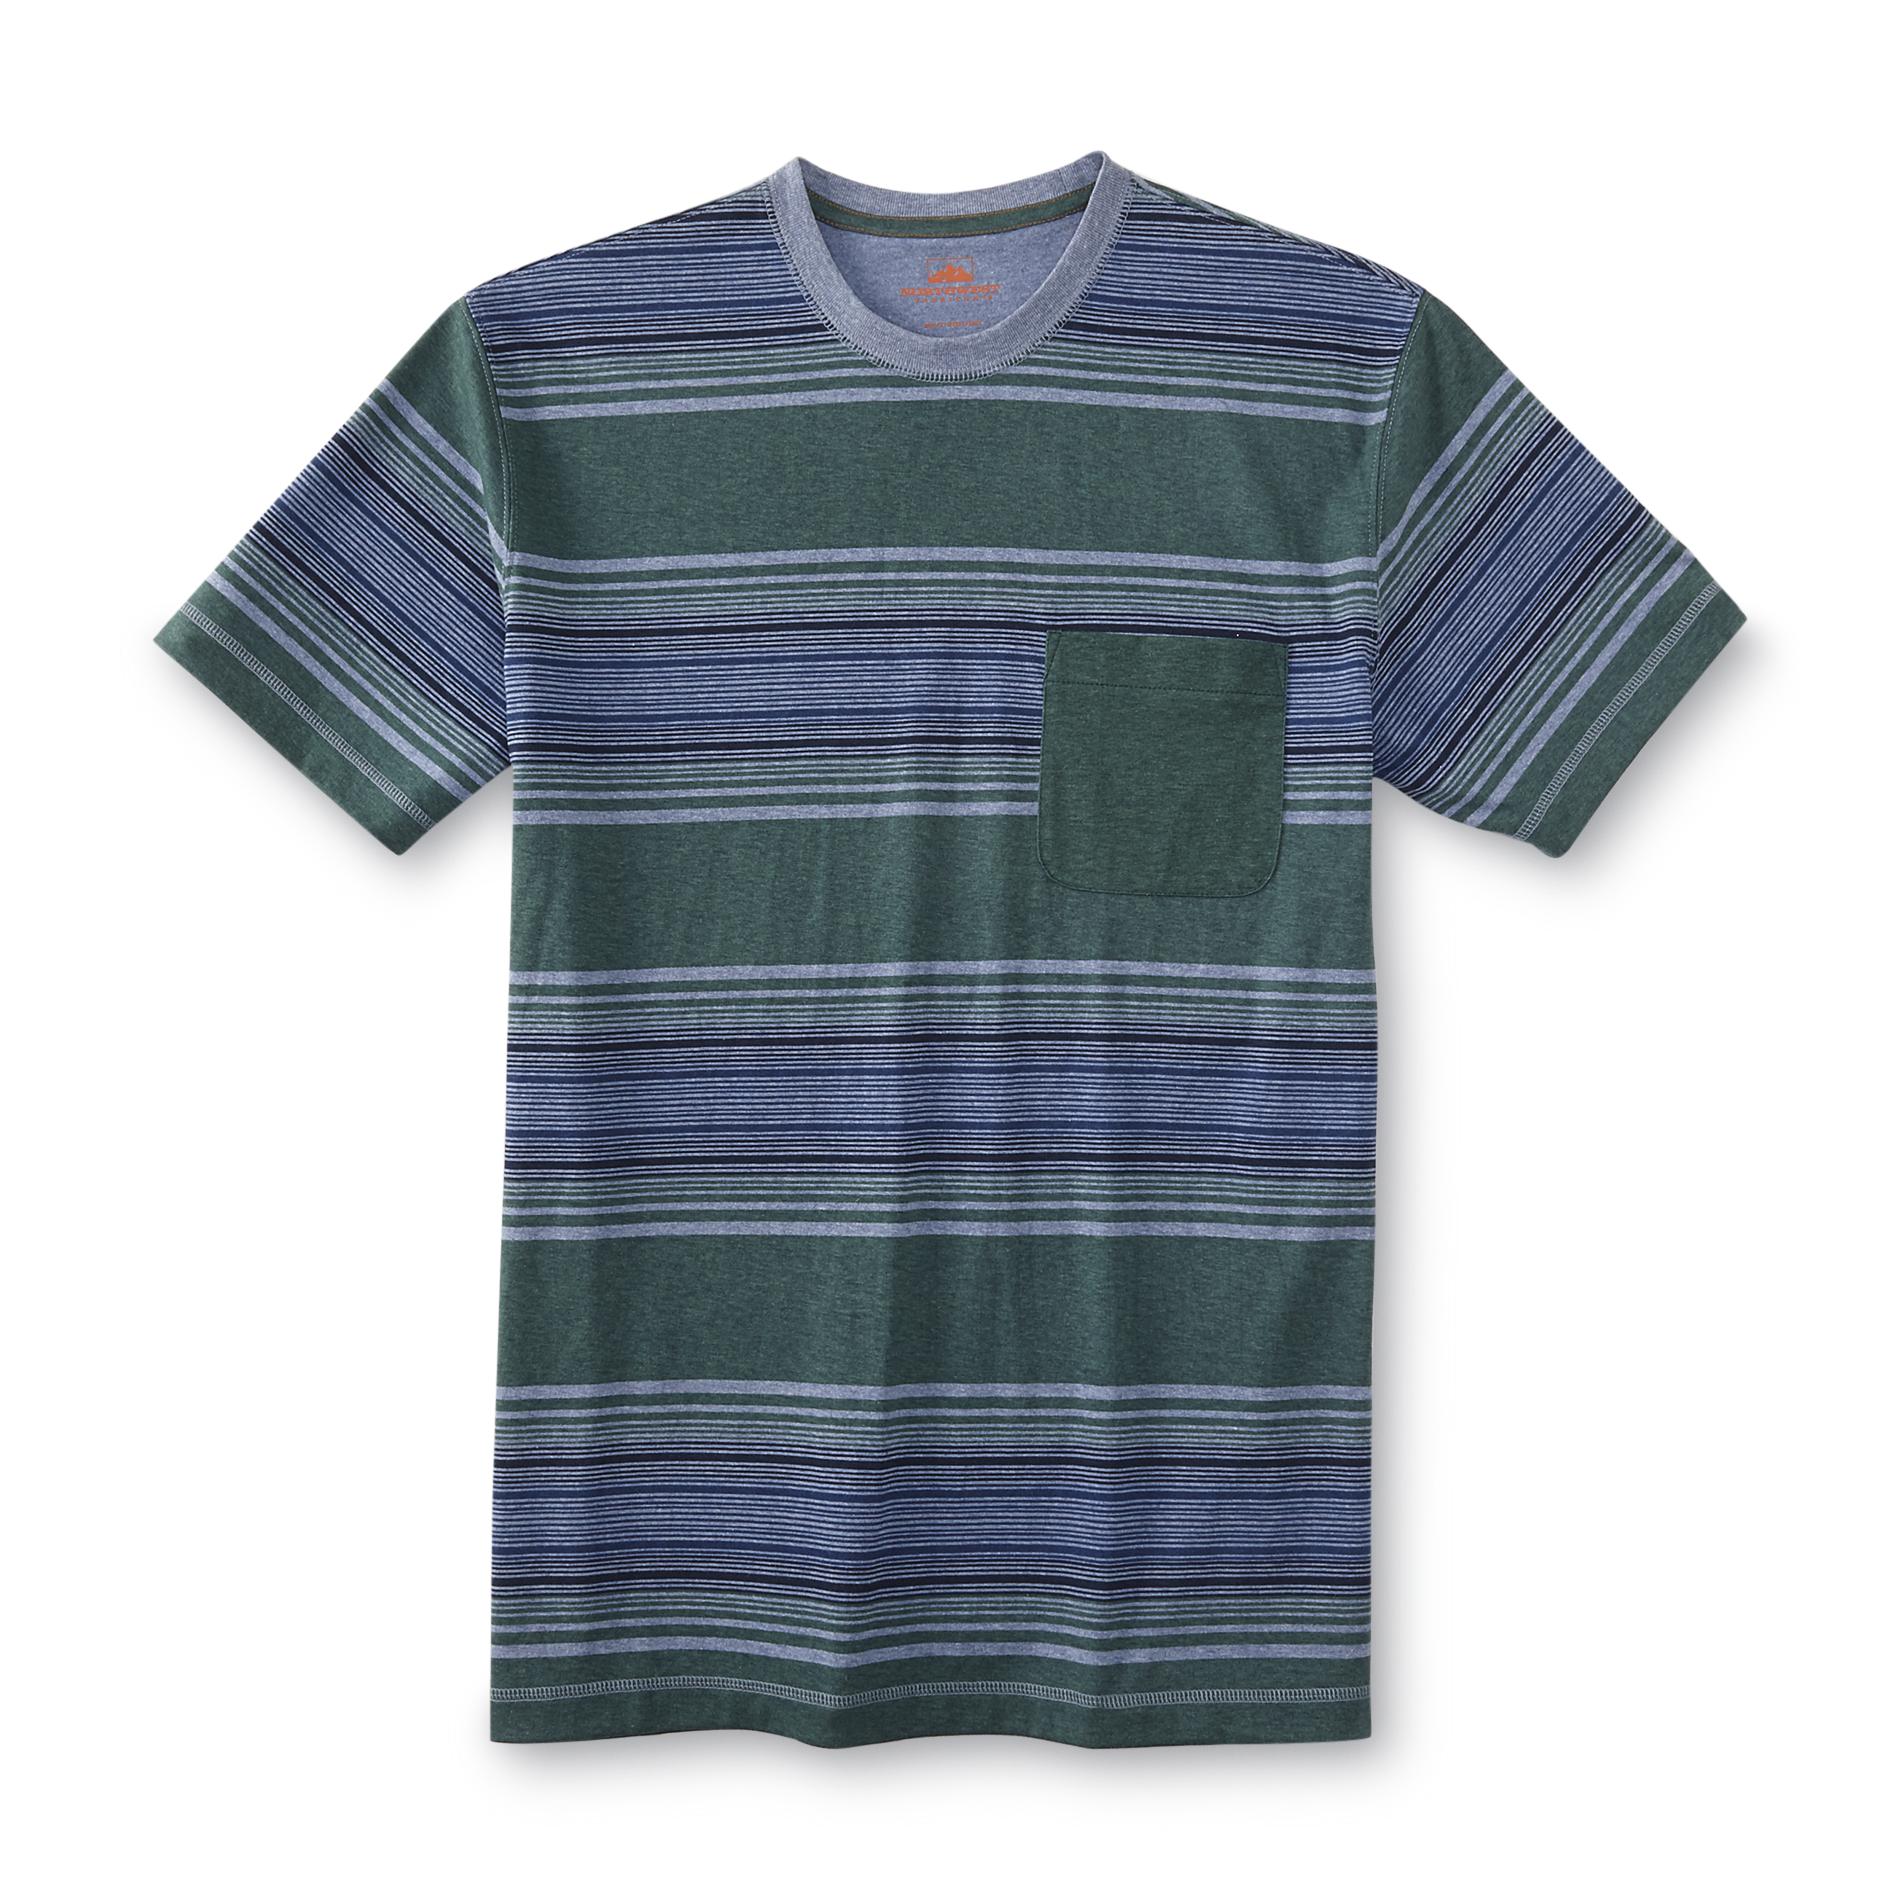 Northwest Territory Men's Big & Tall Jersey Knit T-Shirt - Striped